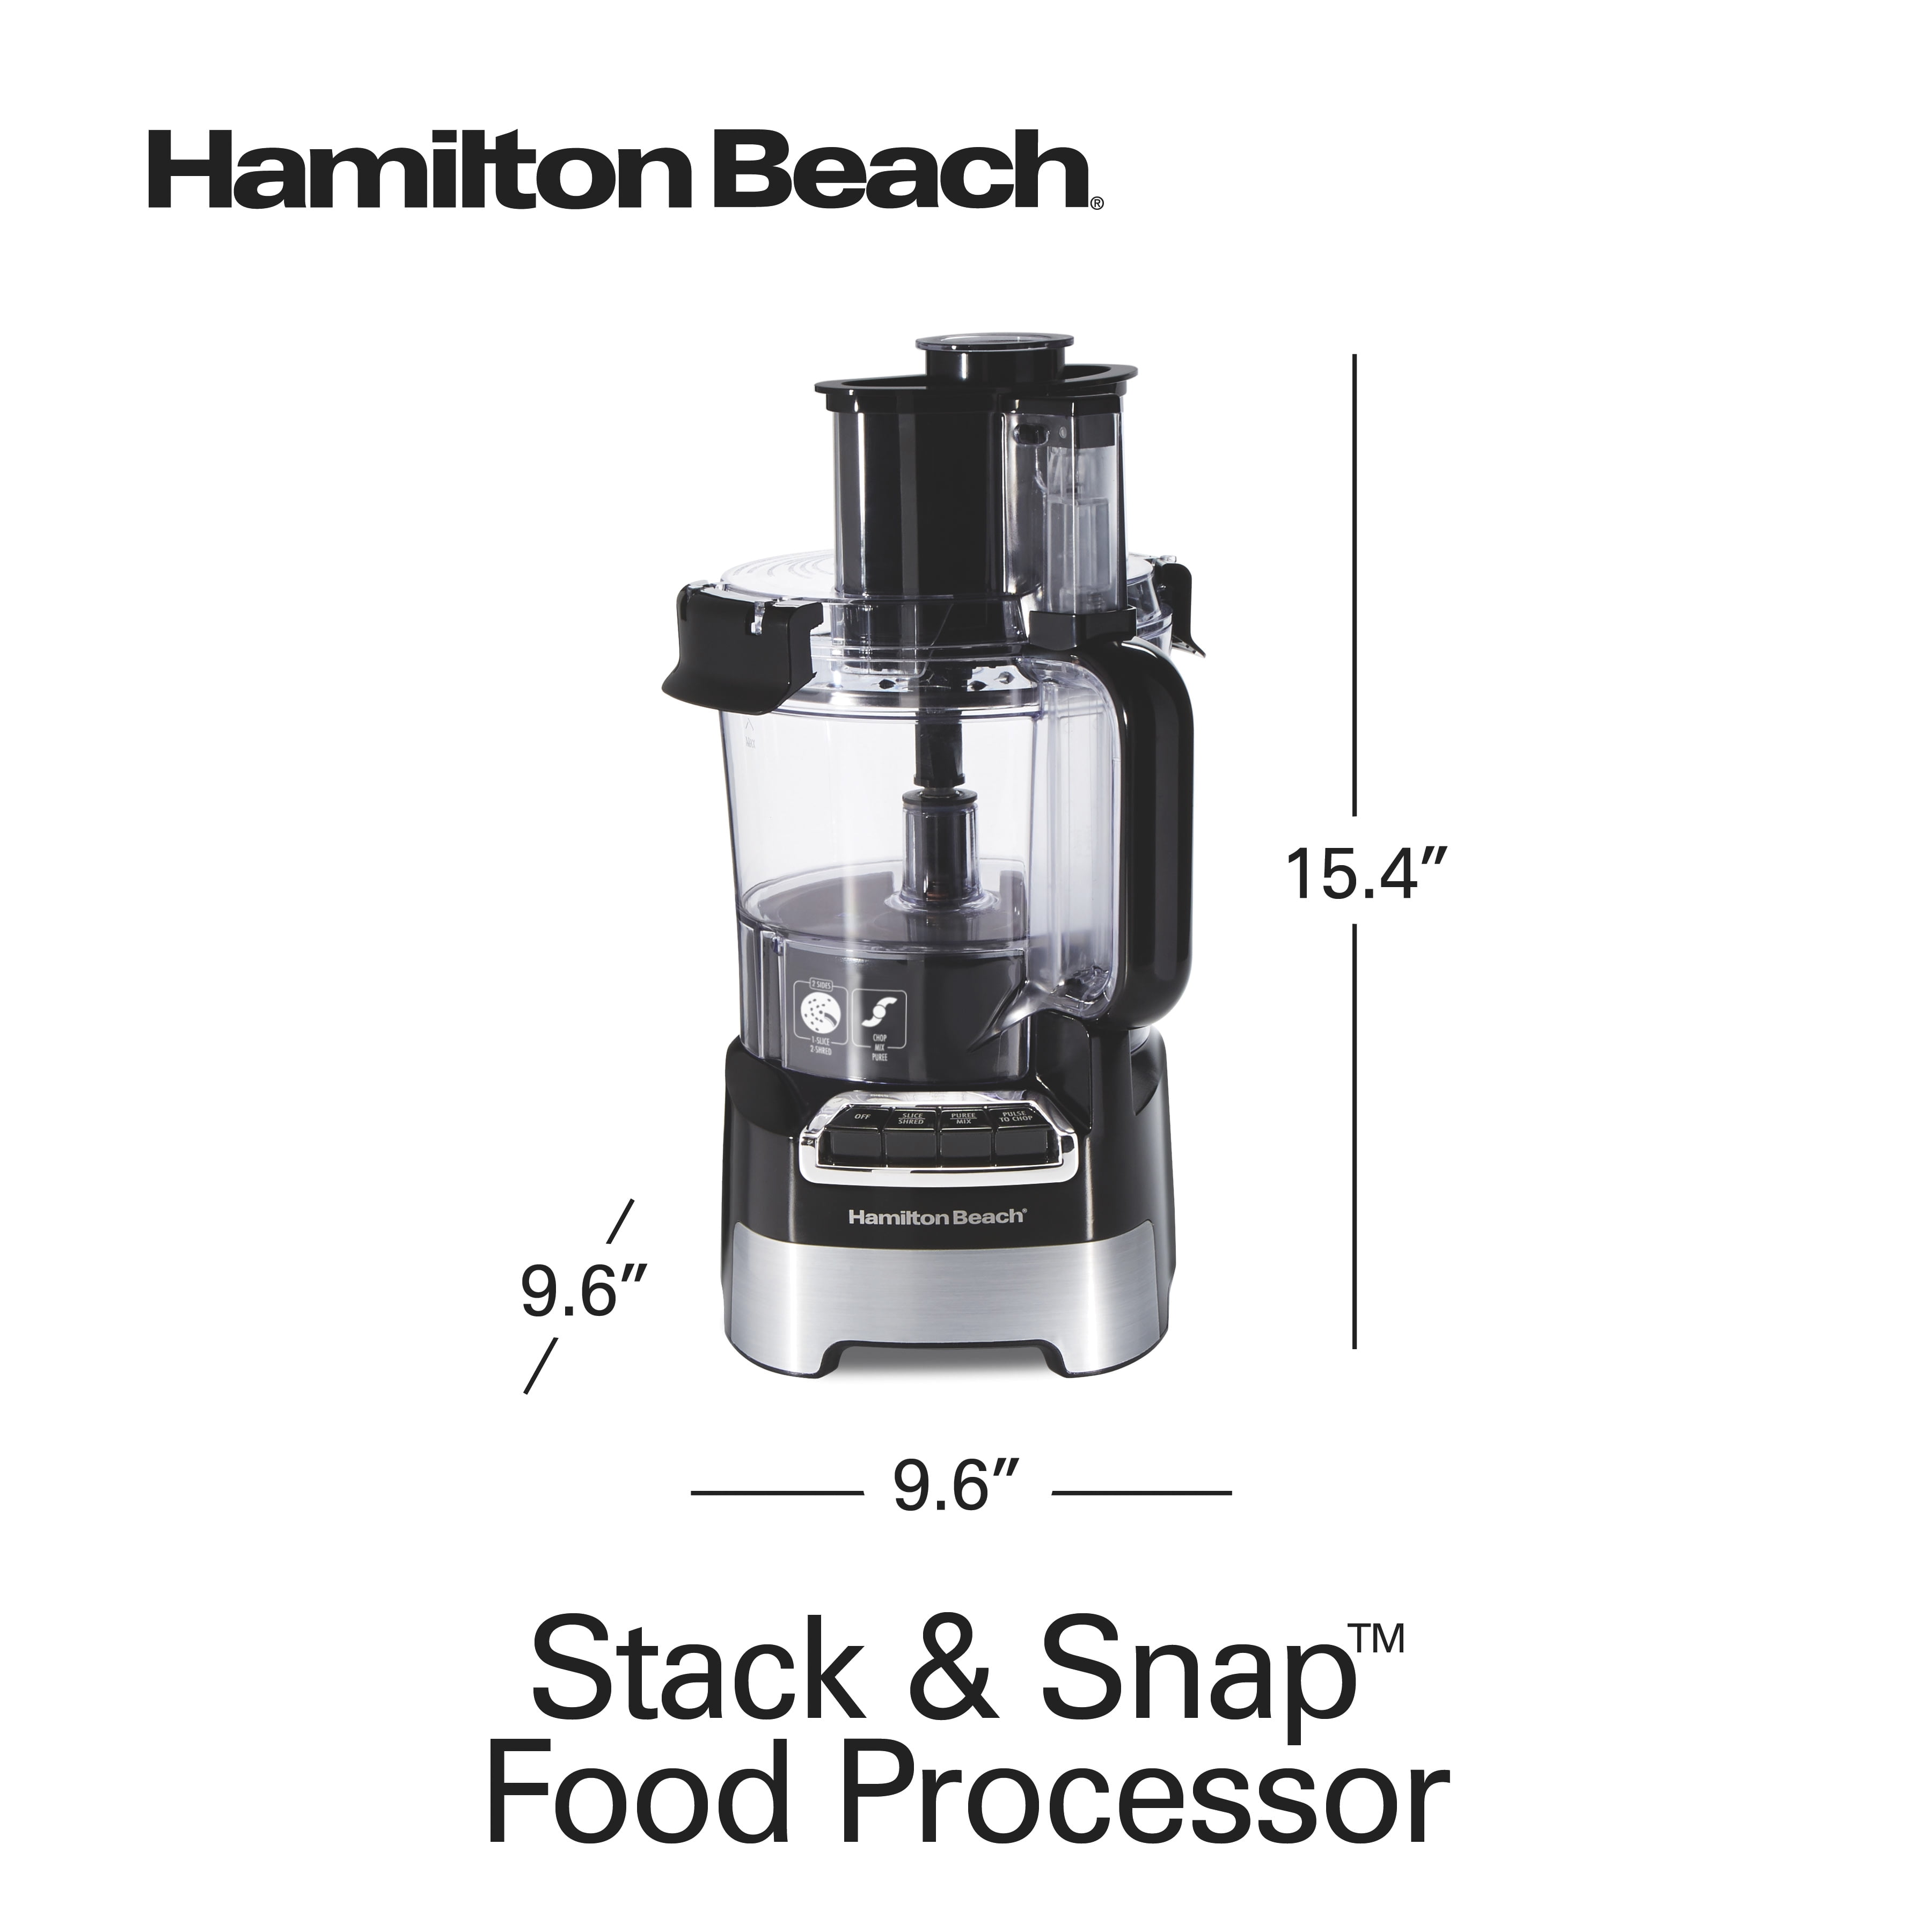 Hamilton Beach Stack & Snap Food Processor, 12 Cup Capacity, 70729